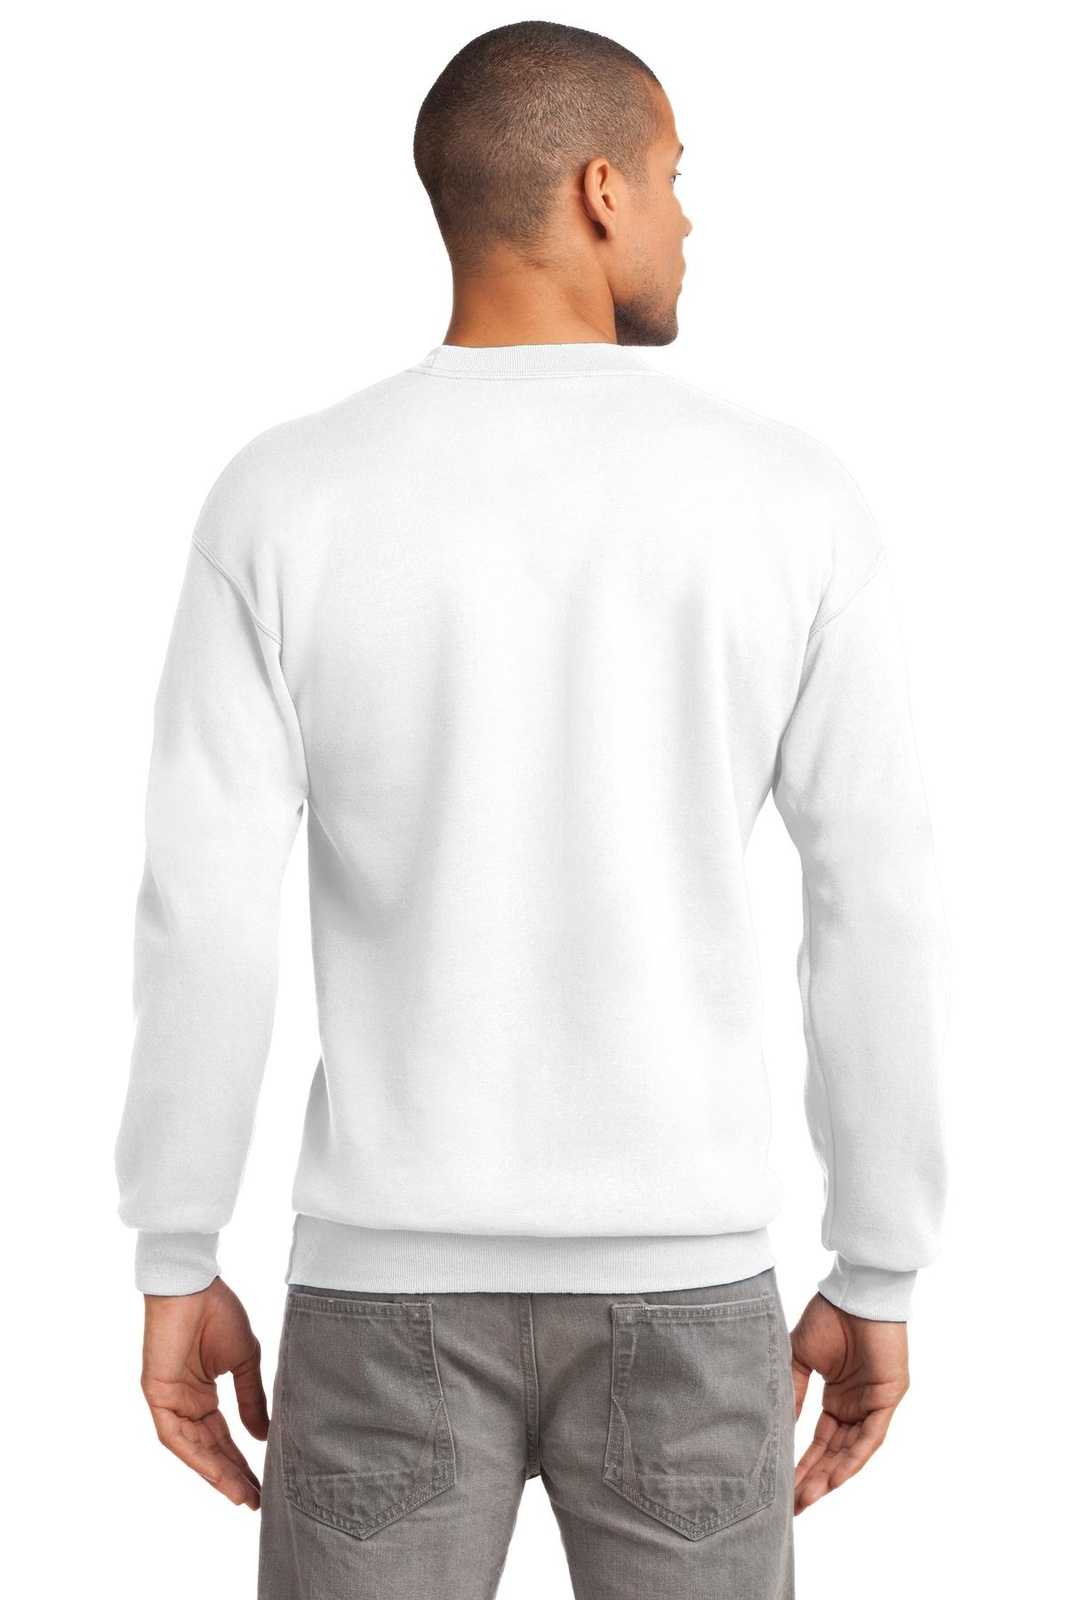 Port & Company PC90T Tall Essential Fleece Crewneck Sweatshirt - White - HIT a Double - 1